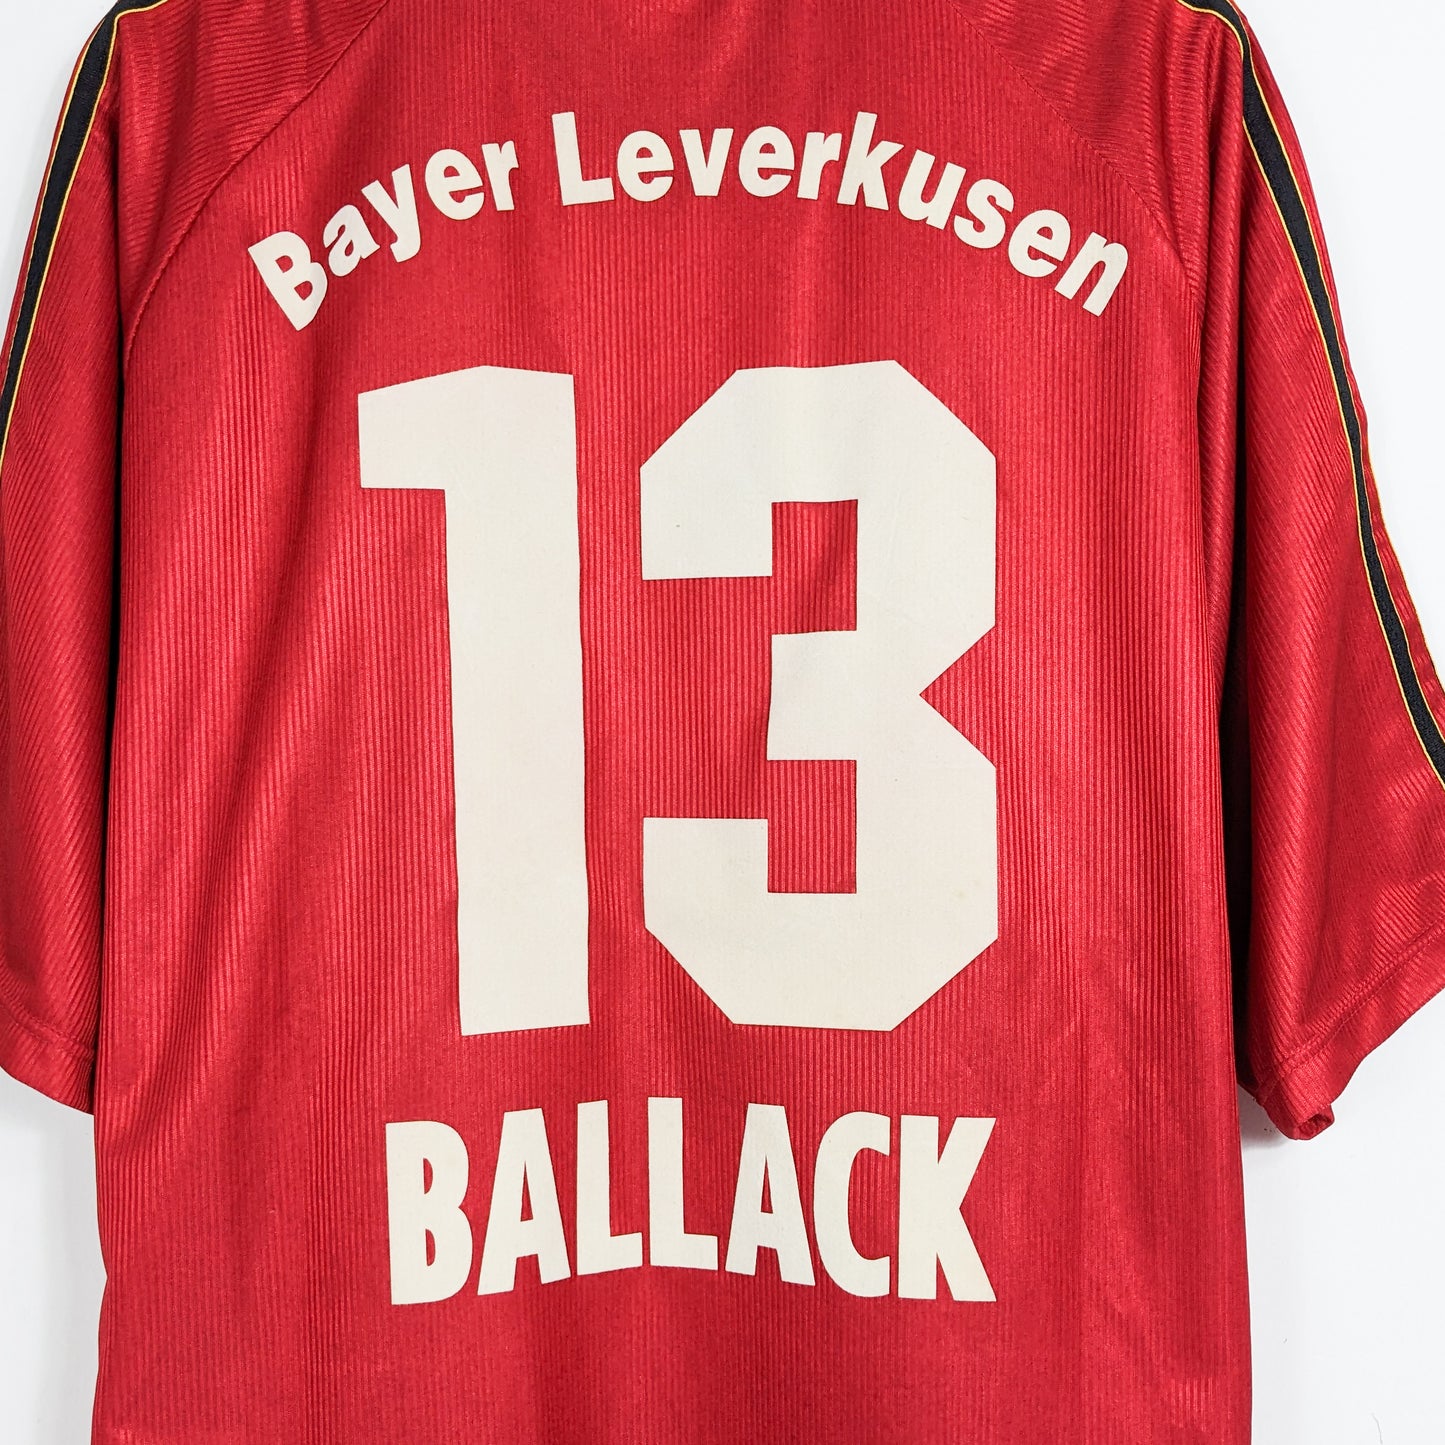 Authentic Bayer Leverkusen 1998/1999 Home - Ballack #13 Size XL